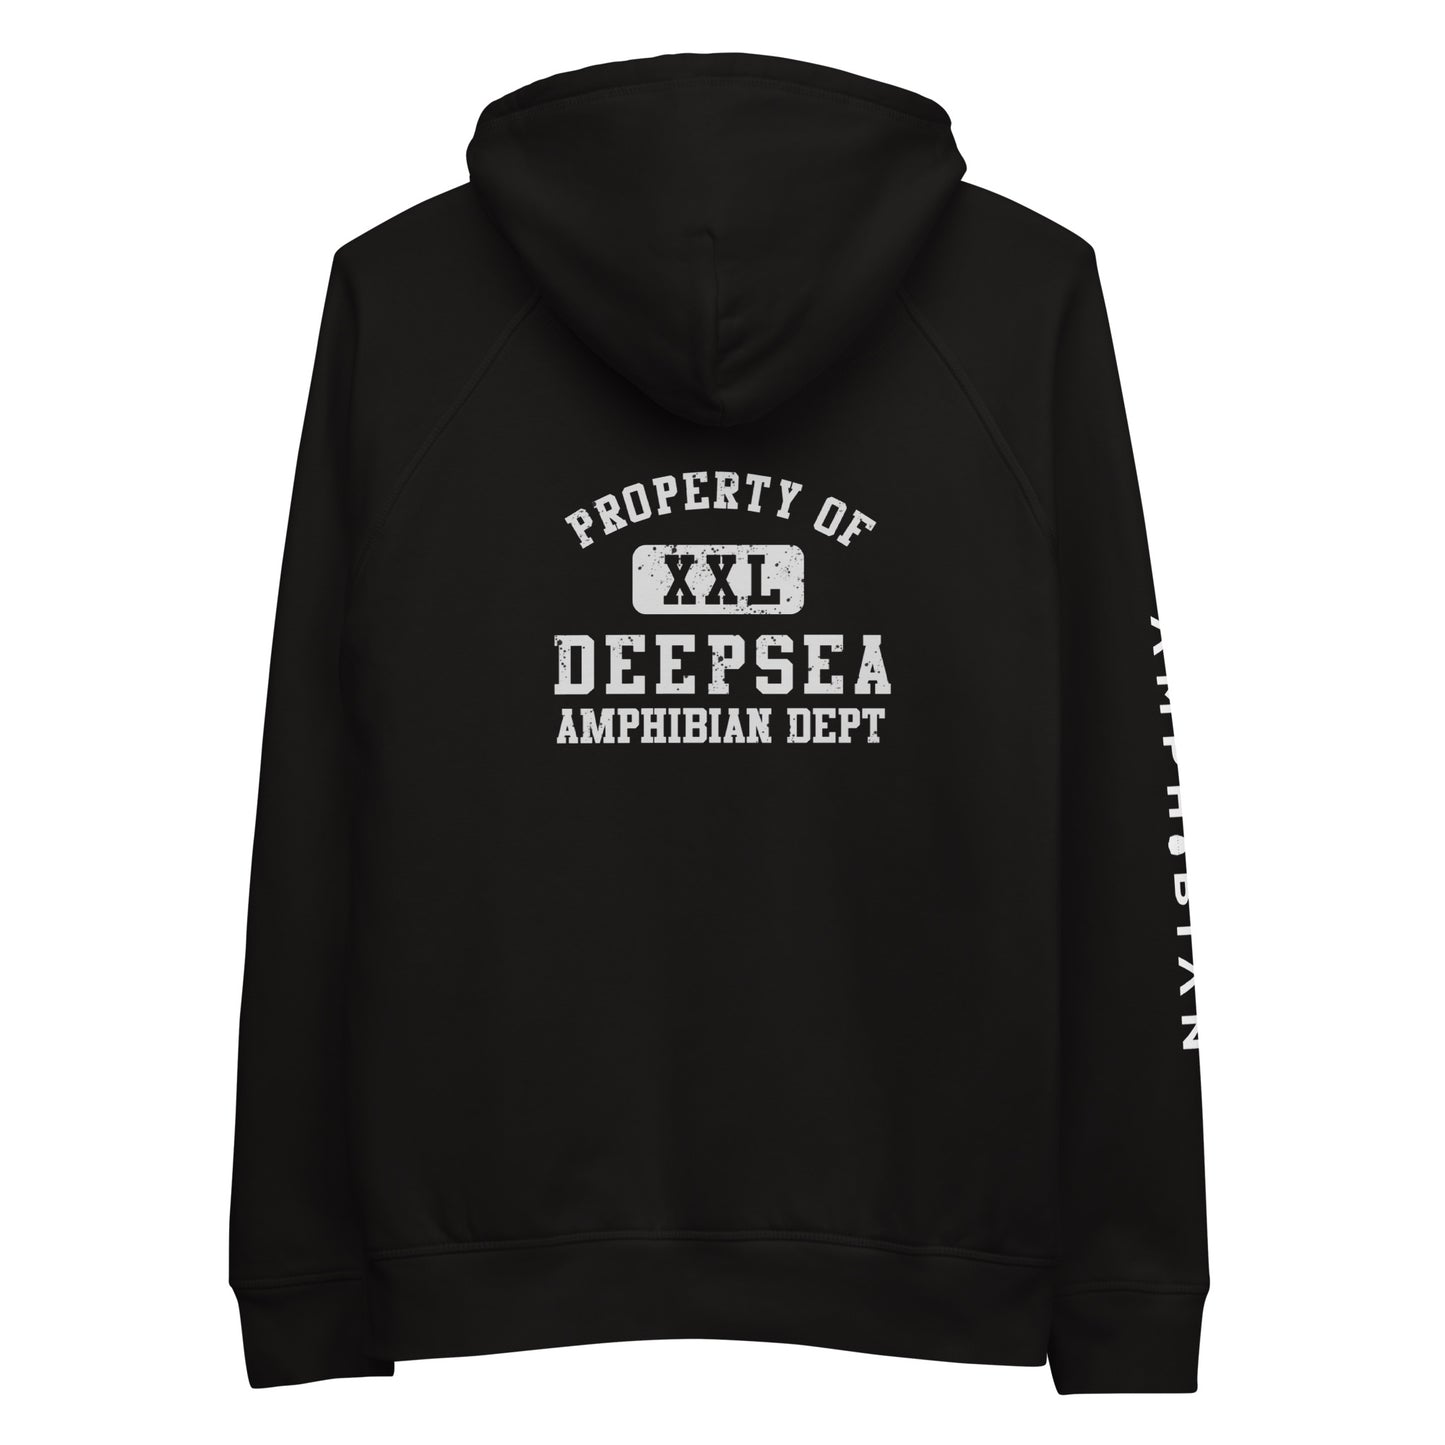 DEEPSEA AMPHIBIAN Dept. hoodie